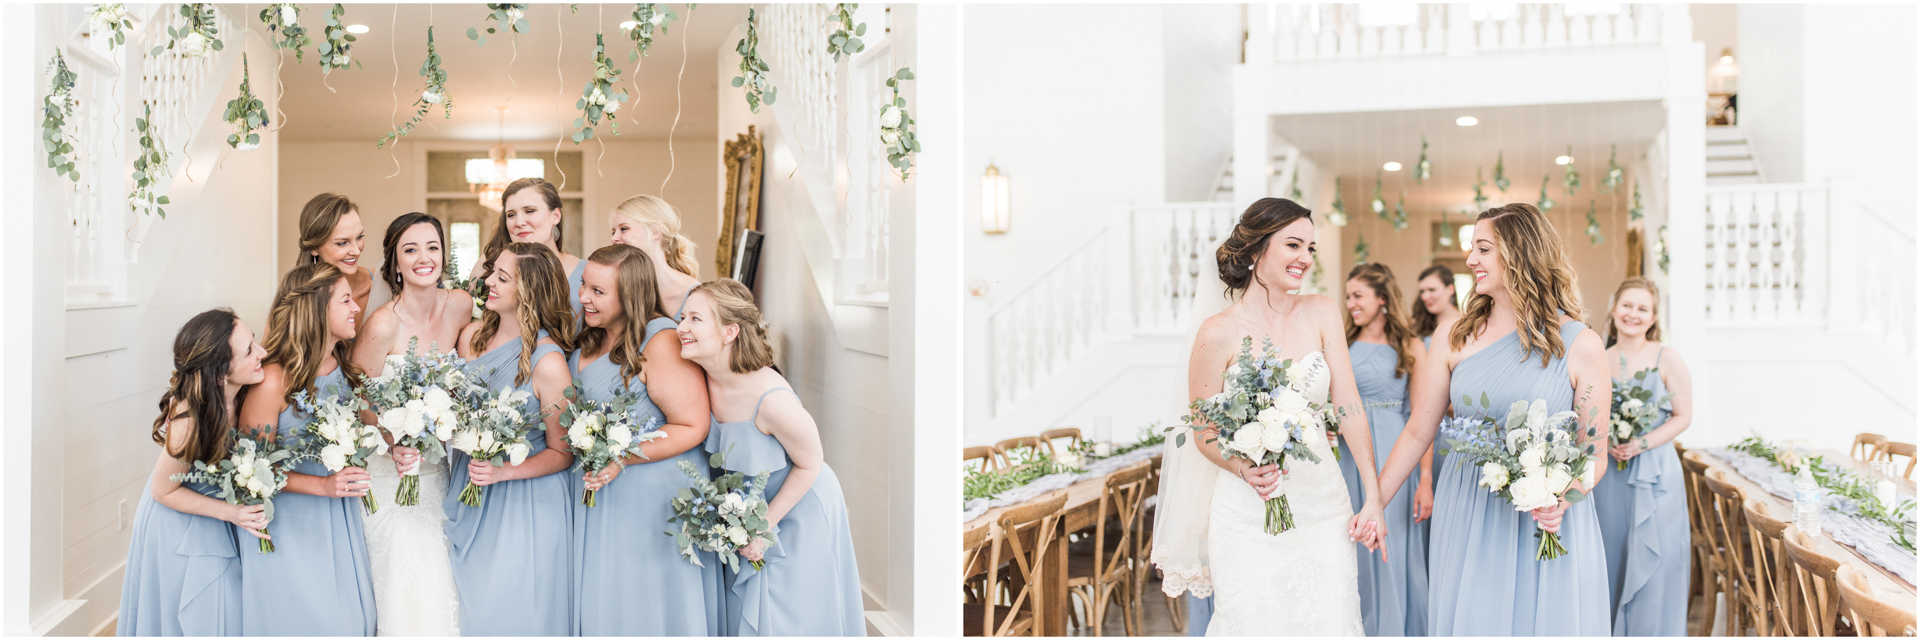 Blue bridesmaids dresses - Indoor portrait - Harvest Hollow